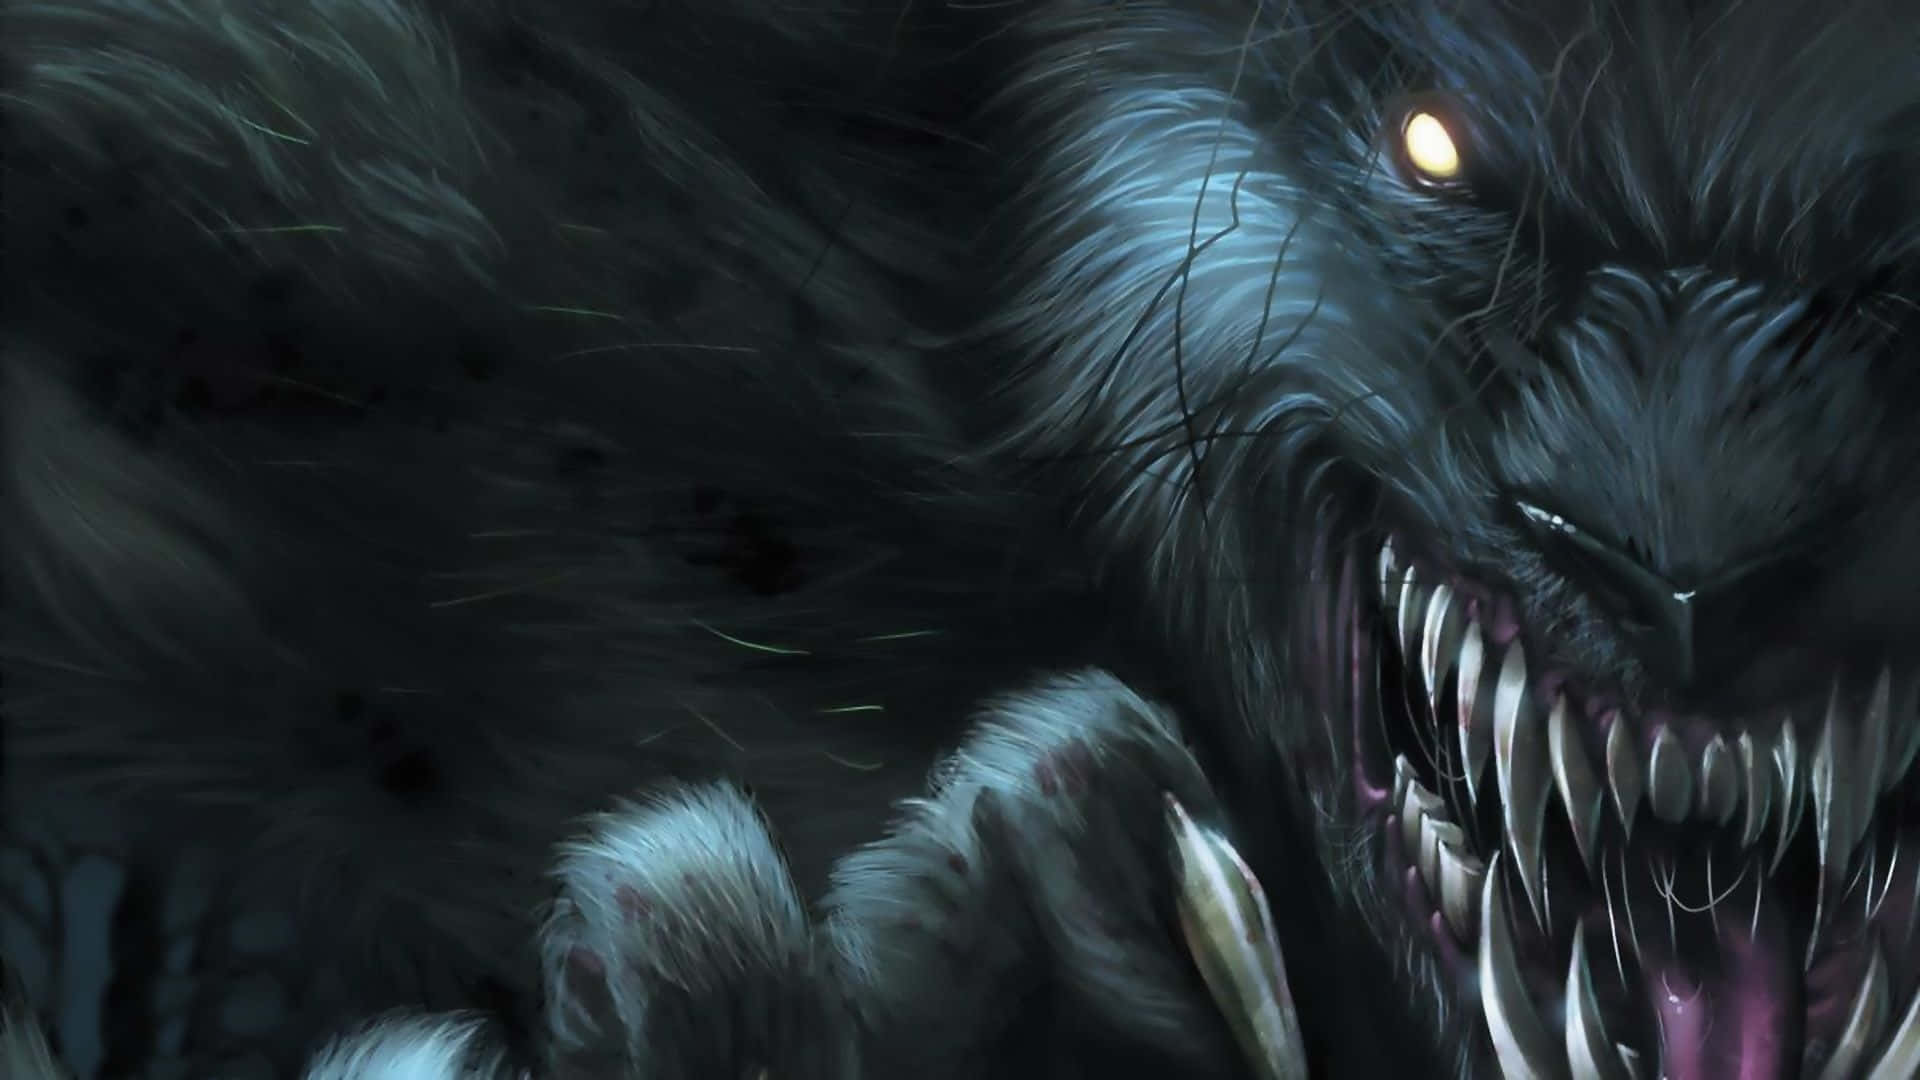 A Werewolf Lurks in the Shadows